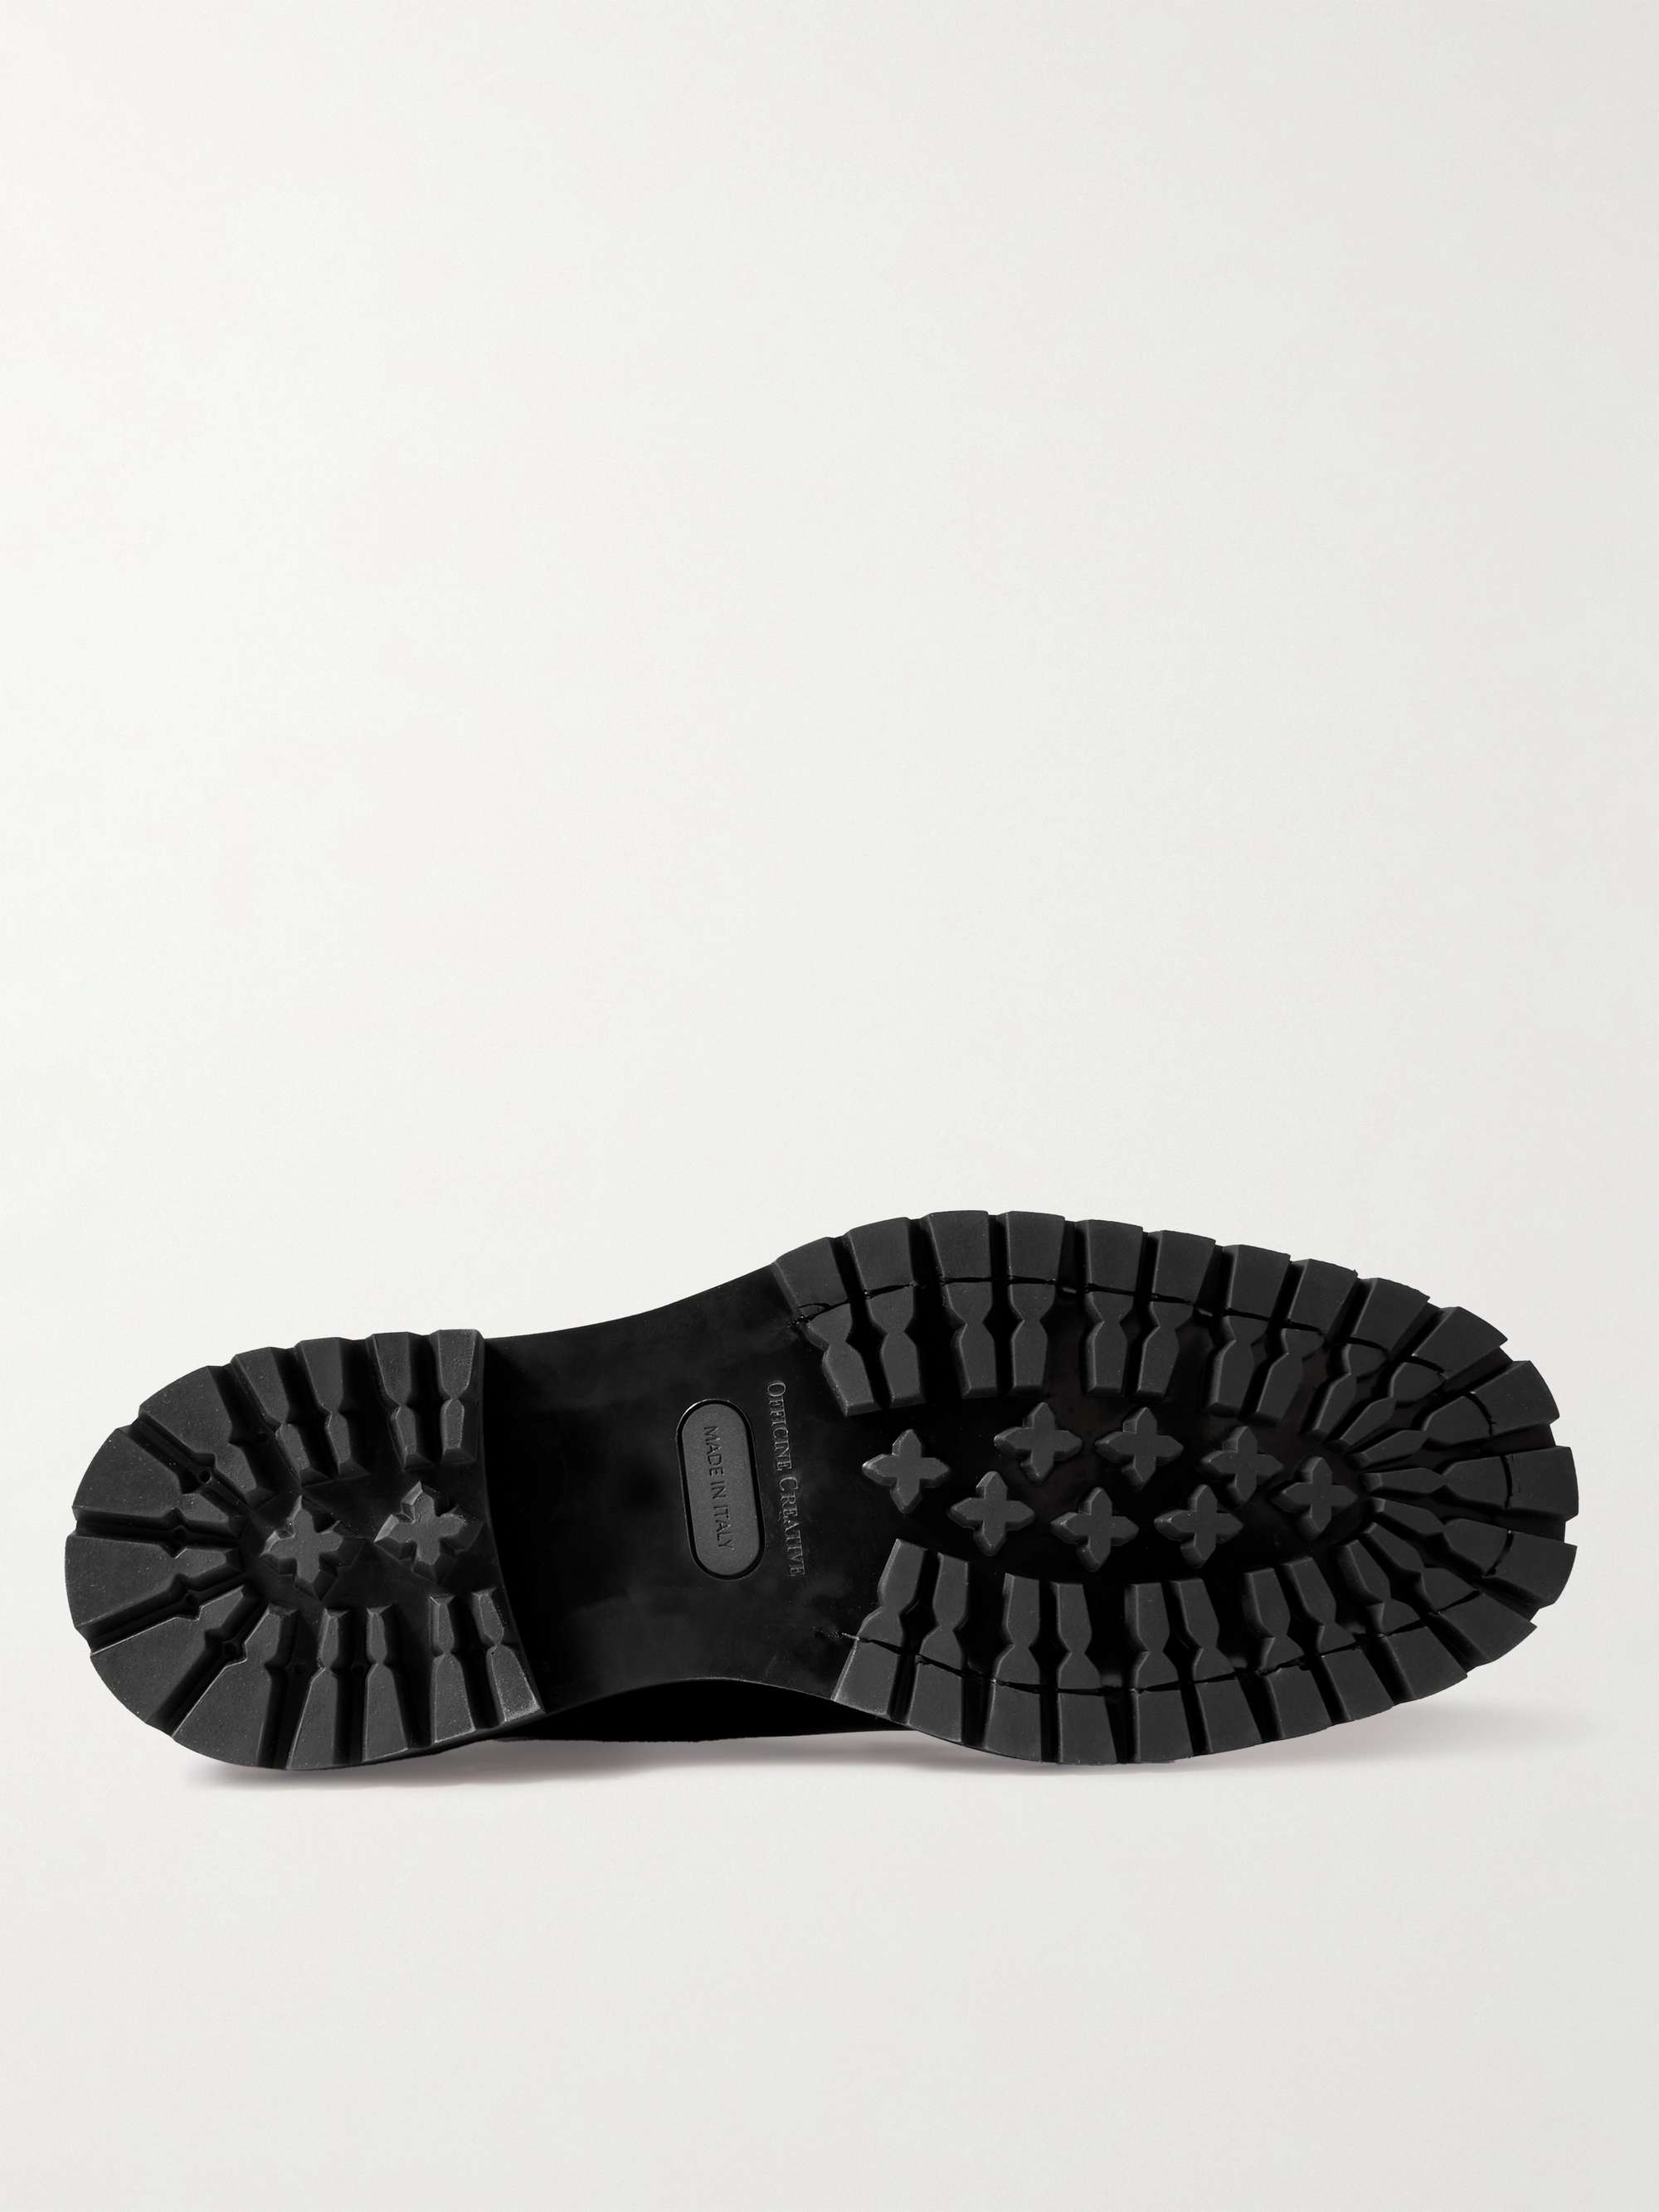 OFFICINE CREATIVE Joss 002 Leather Derby Shoes for Men | MR PORTER